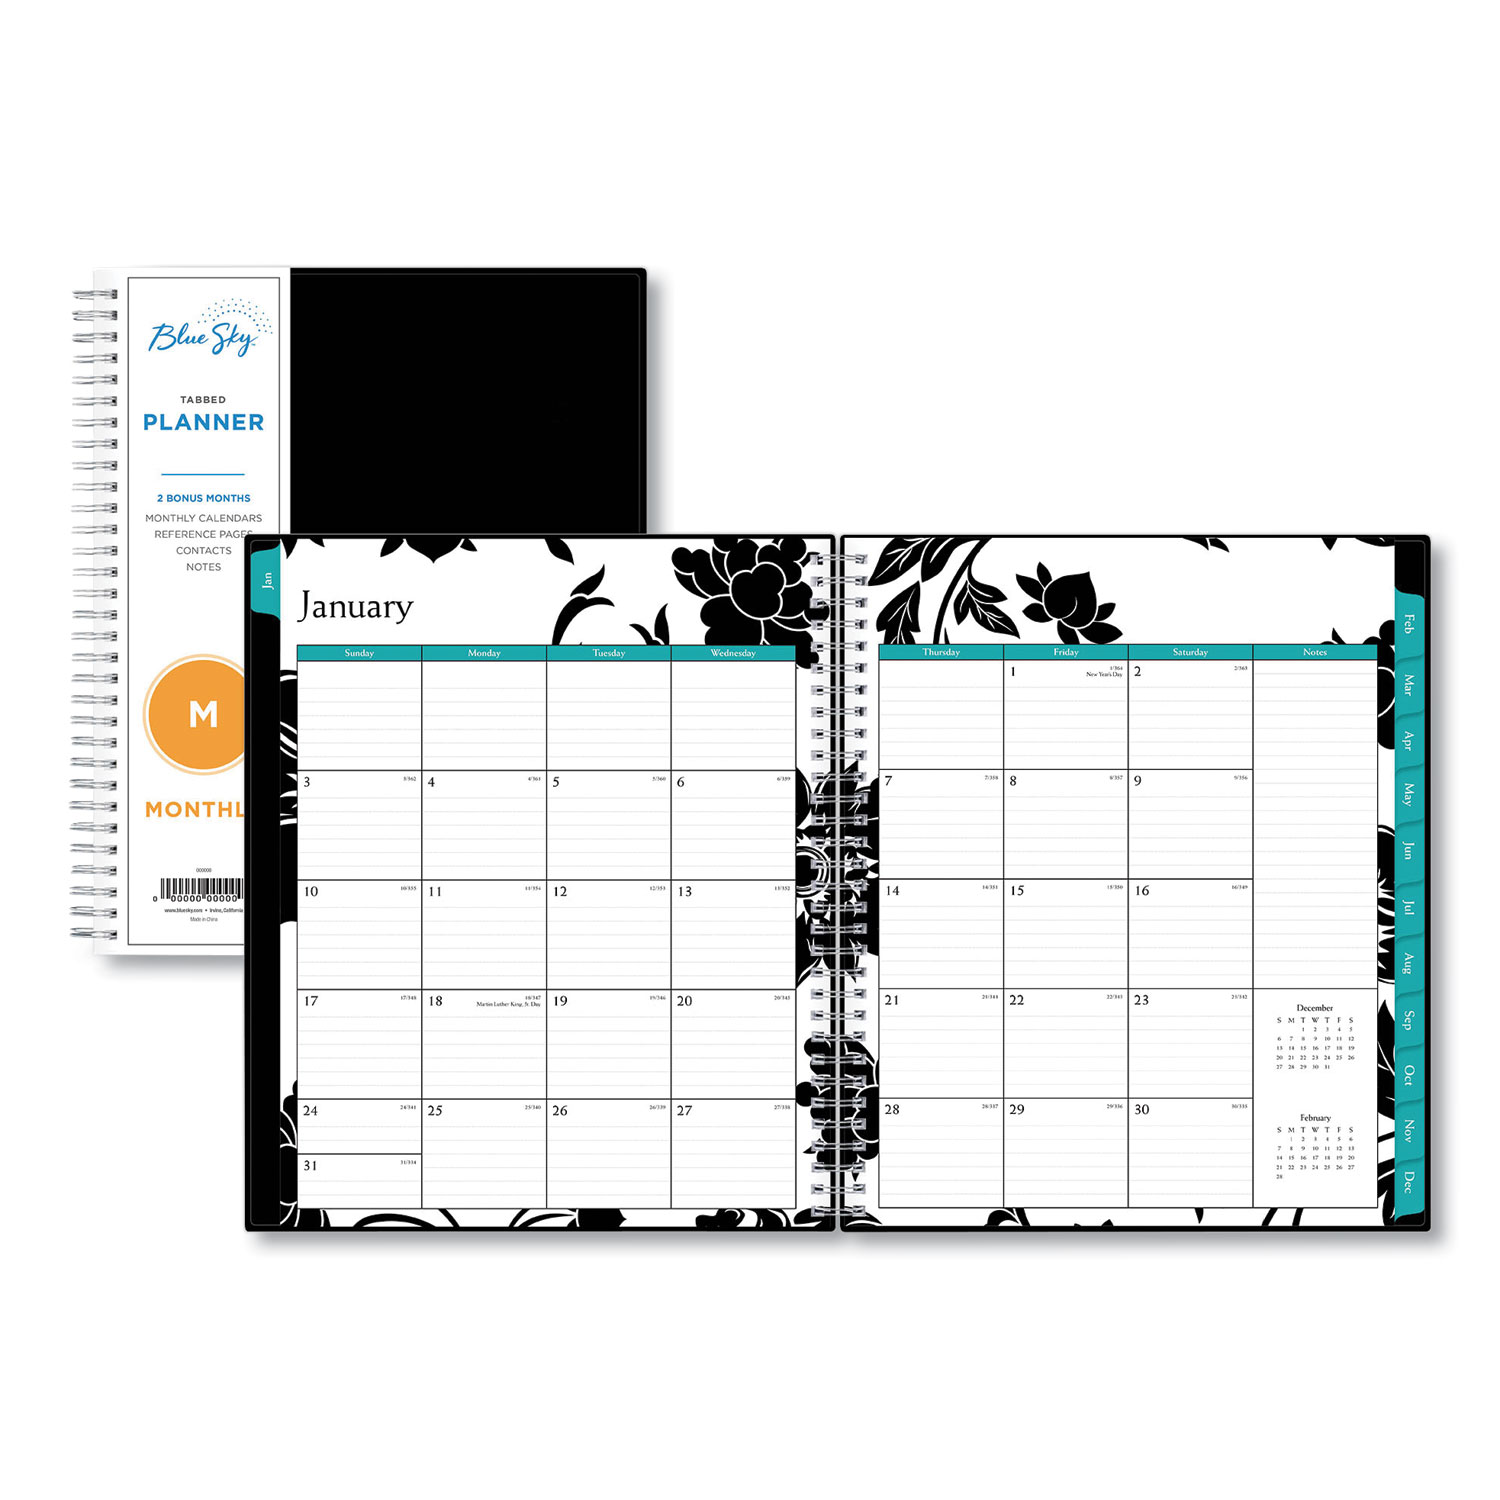  Blue Sky 100004 Barcelona Monthly Planner, 10 x 8, Black Cover, 2020 (BLS100004) 